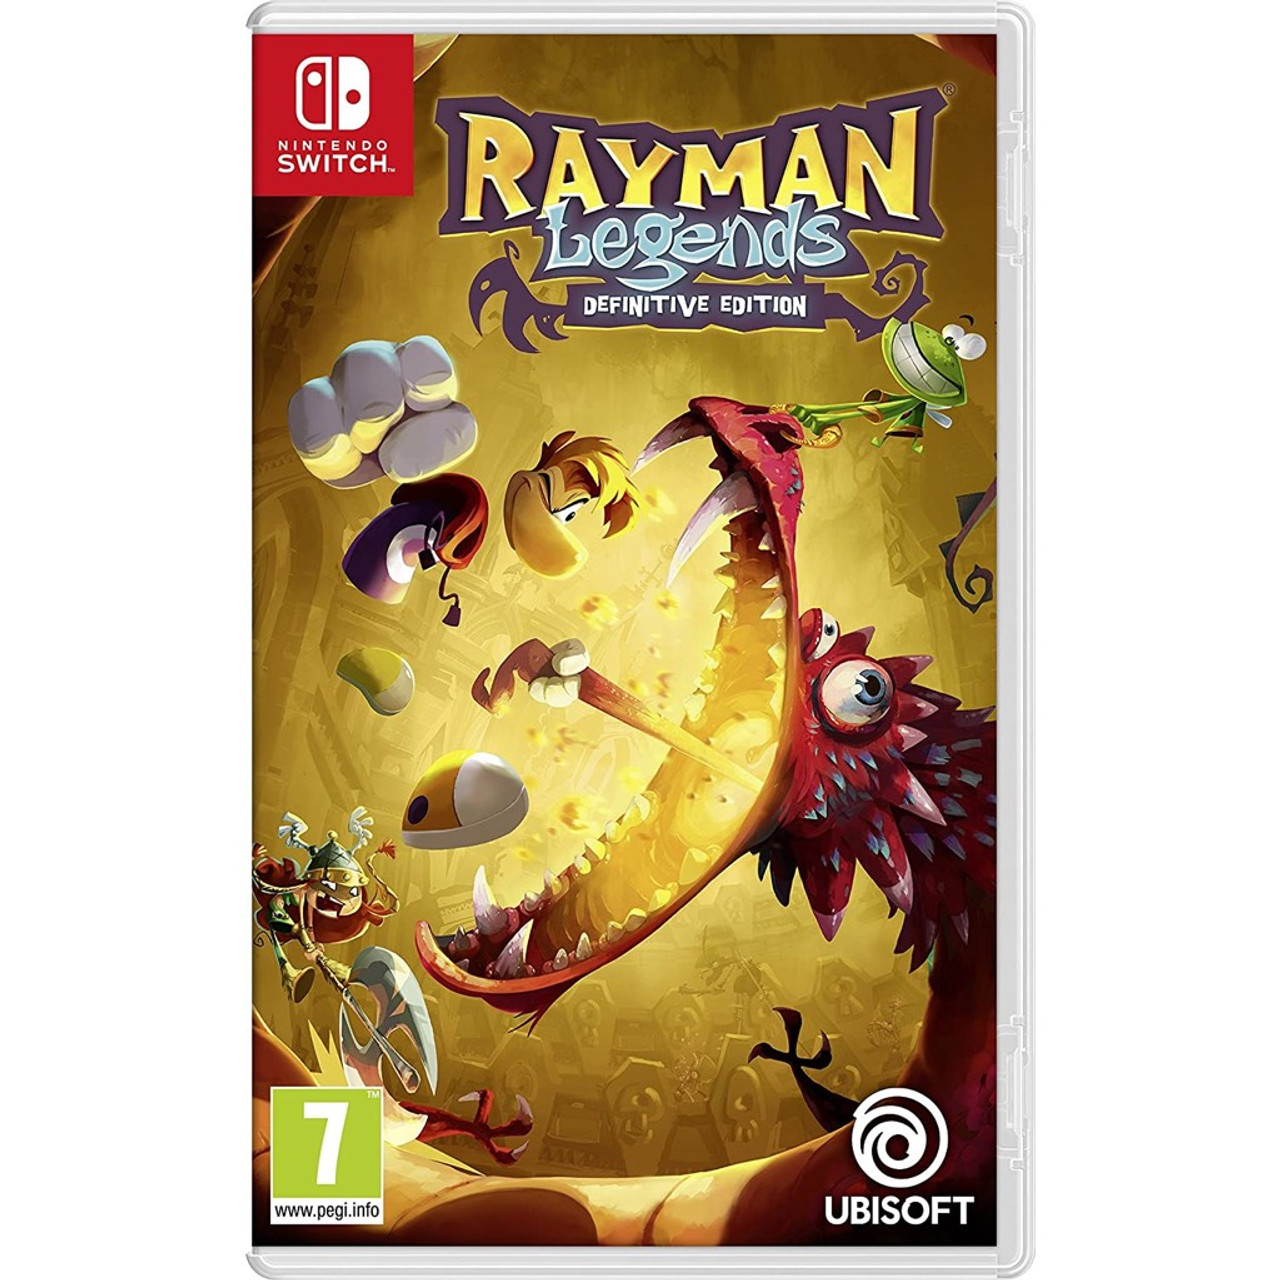 Rayman Legends (Wii U) Review - Vooks